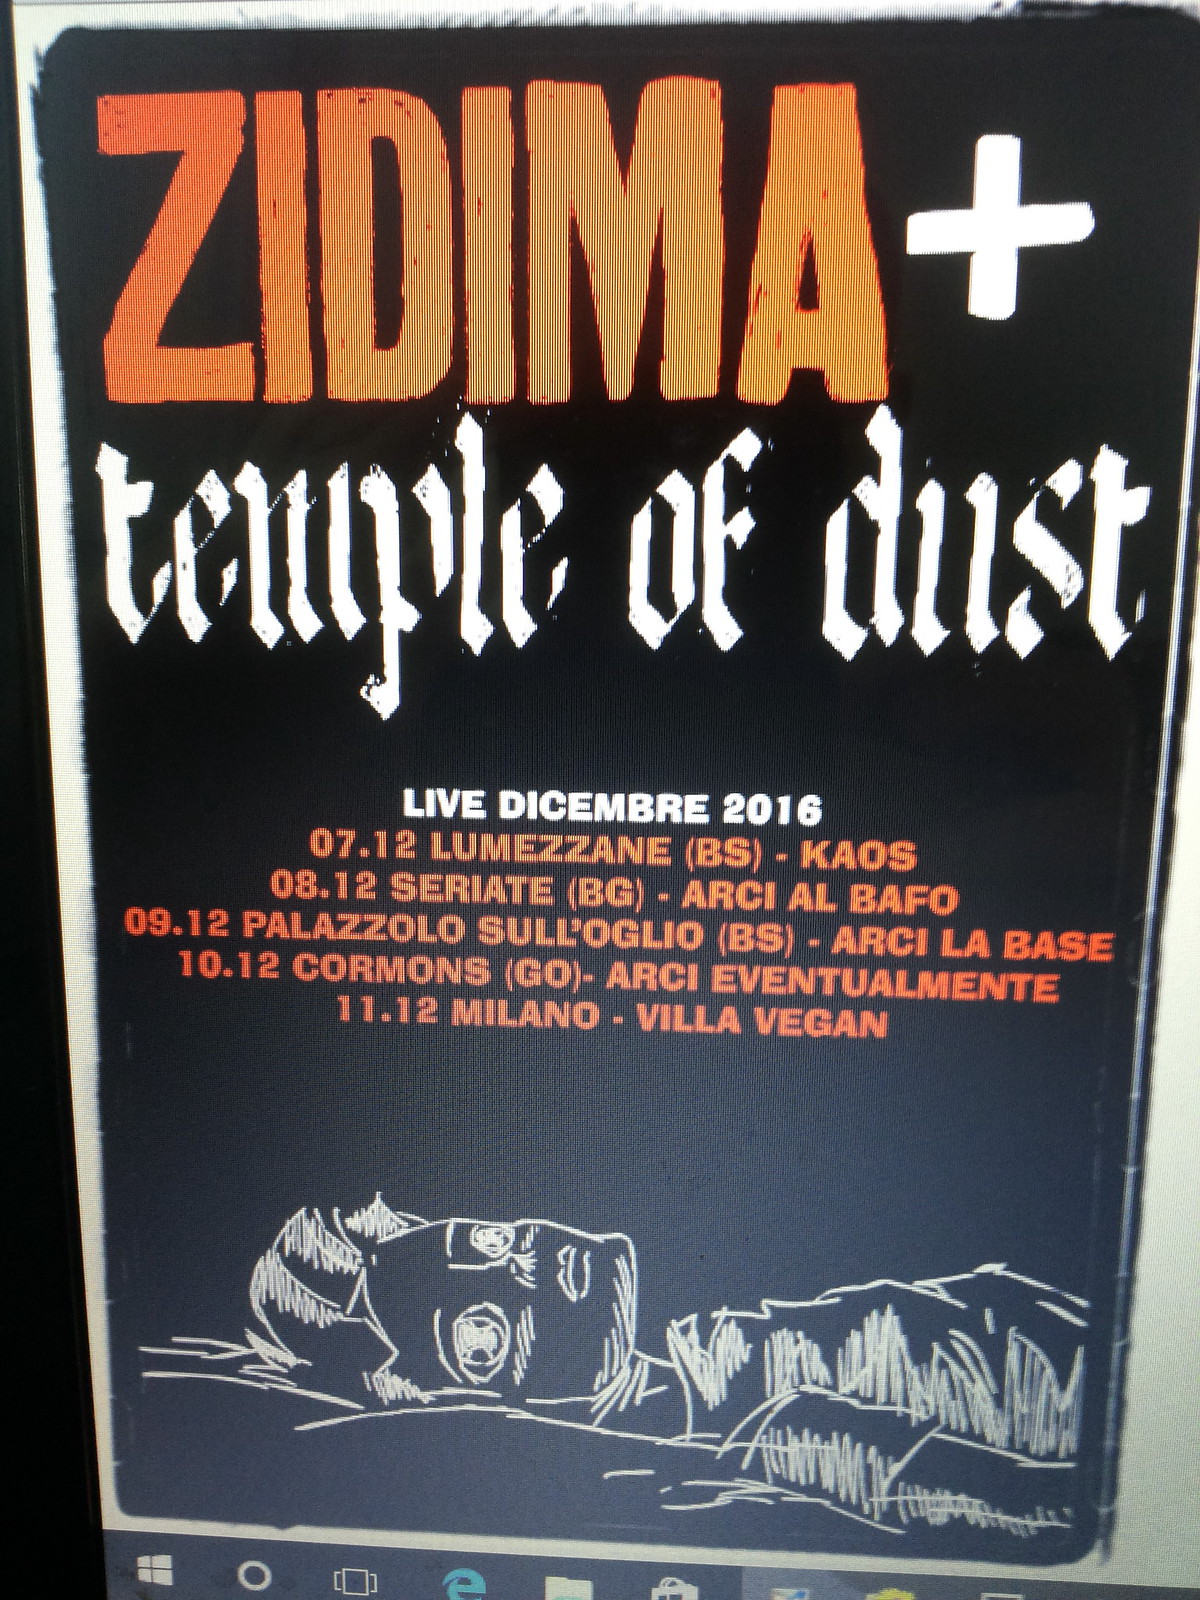 ZiDima + Temple of dust [mini tour dicembre 2016]